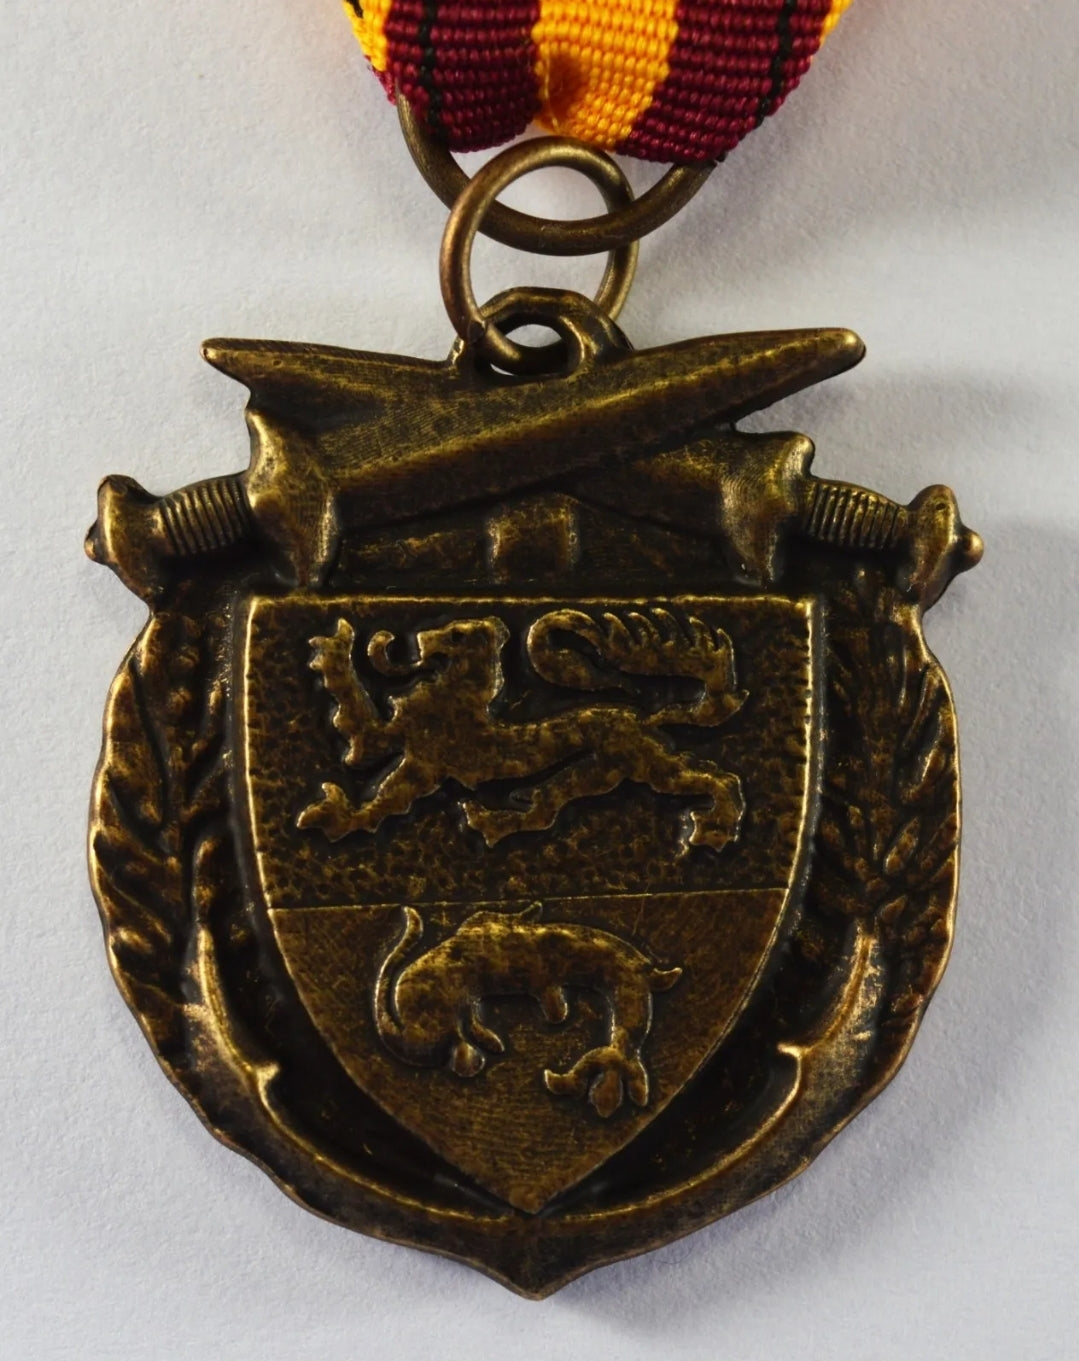 Superb Dunkirk Service/Defence Medal with Ribbon